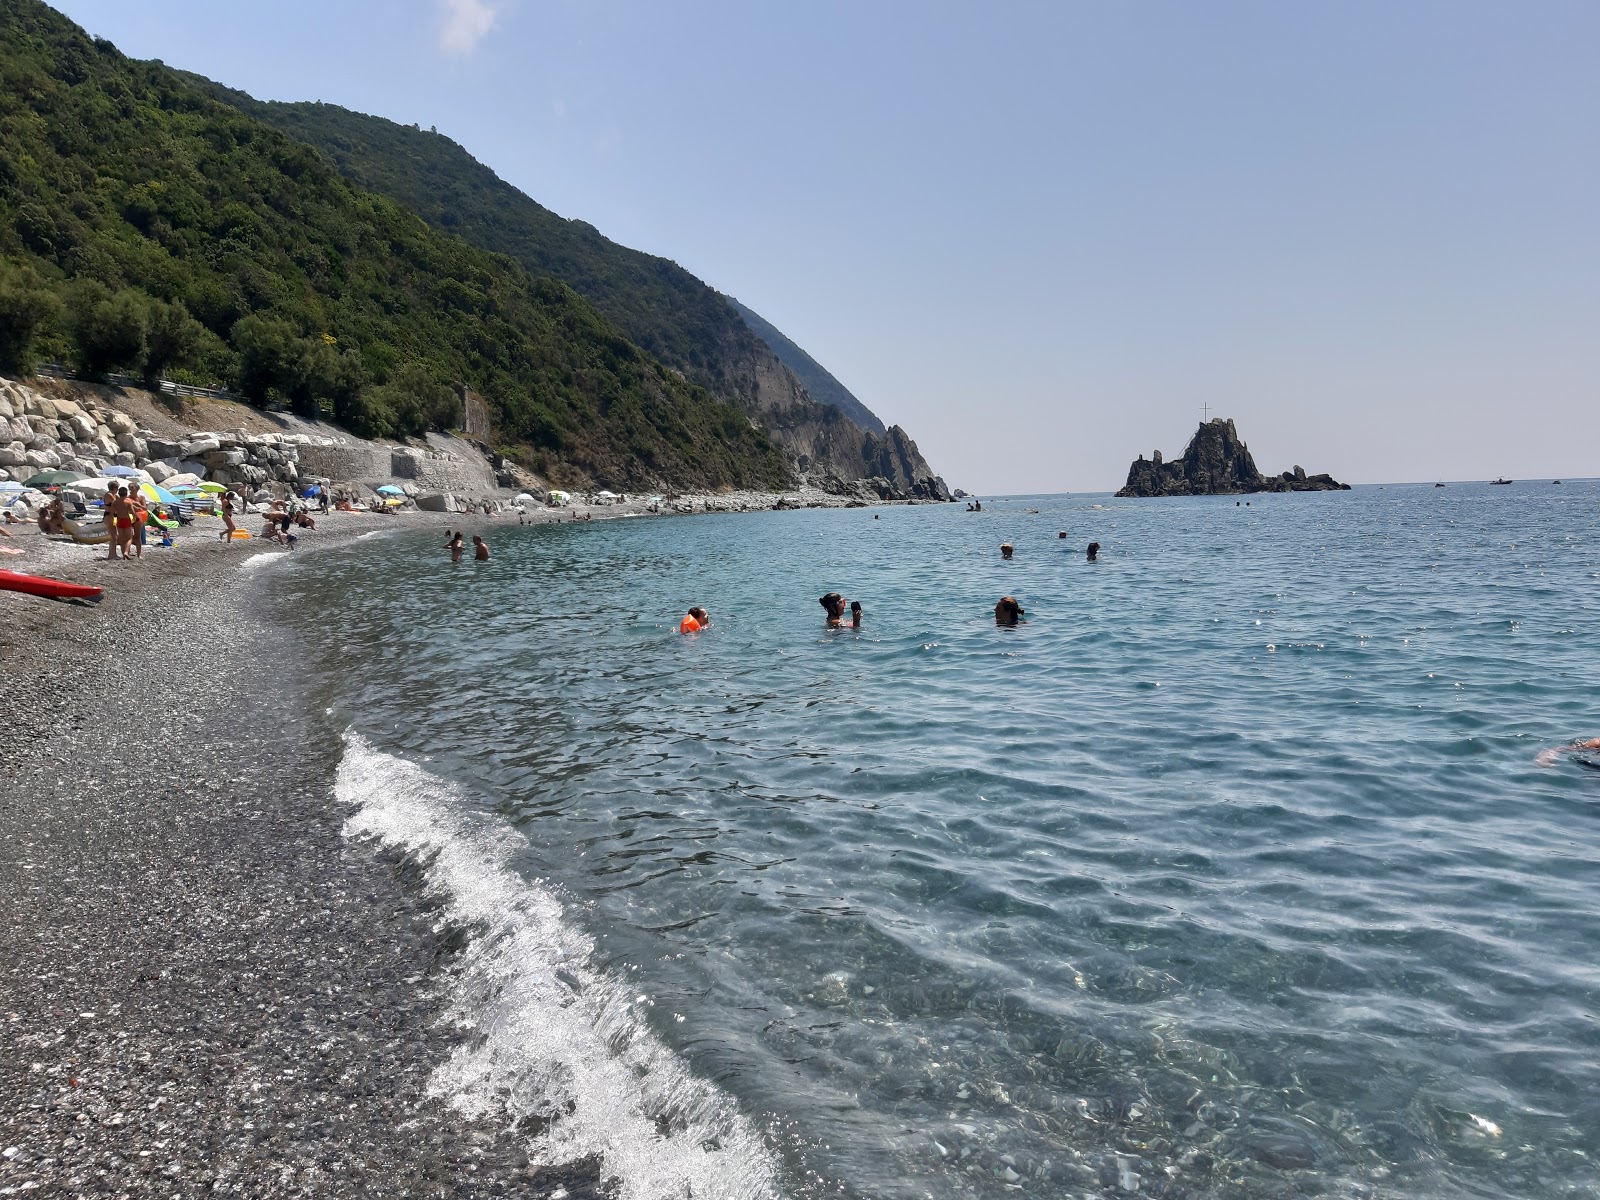 Photo of Spiaggia Riva Trigoso backed by cliffs